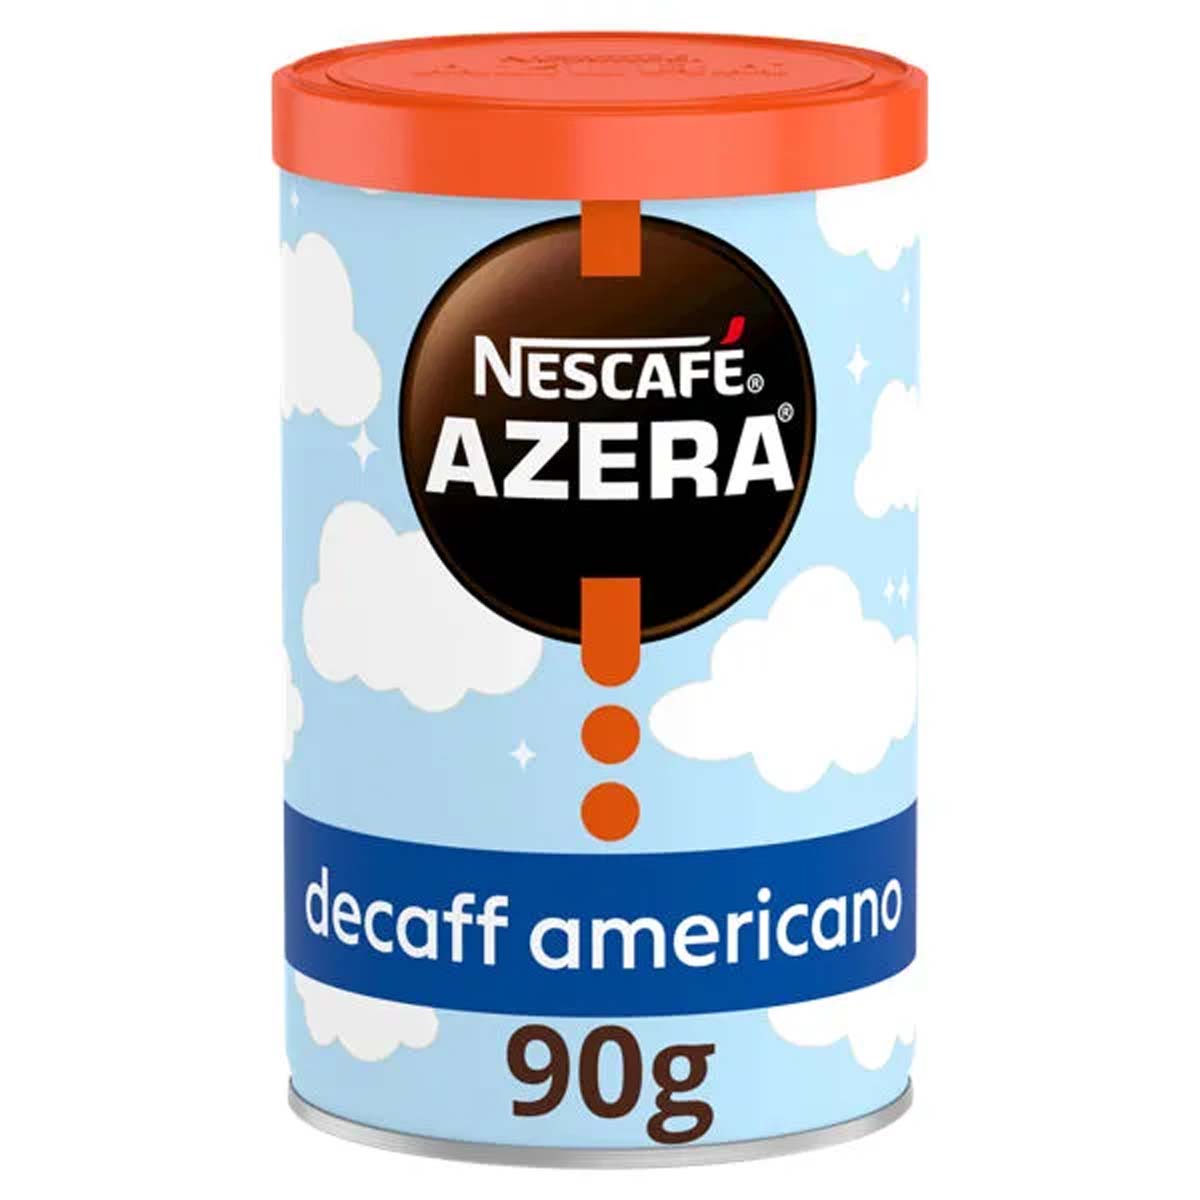 Nescafe - Azera Decaff Americano Instant Coffee - 90g - Continental Food Store